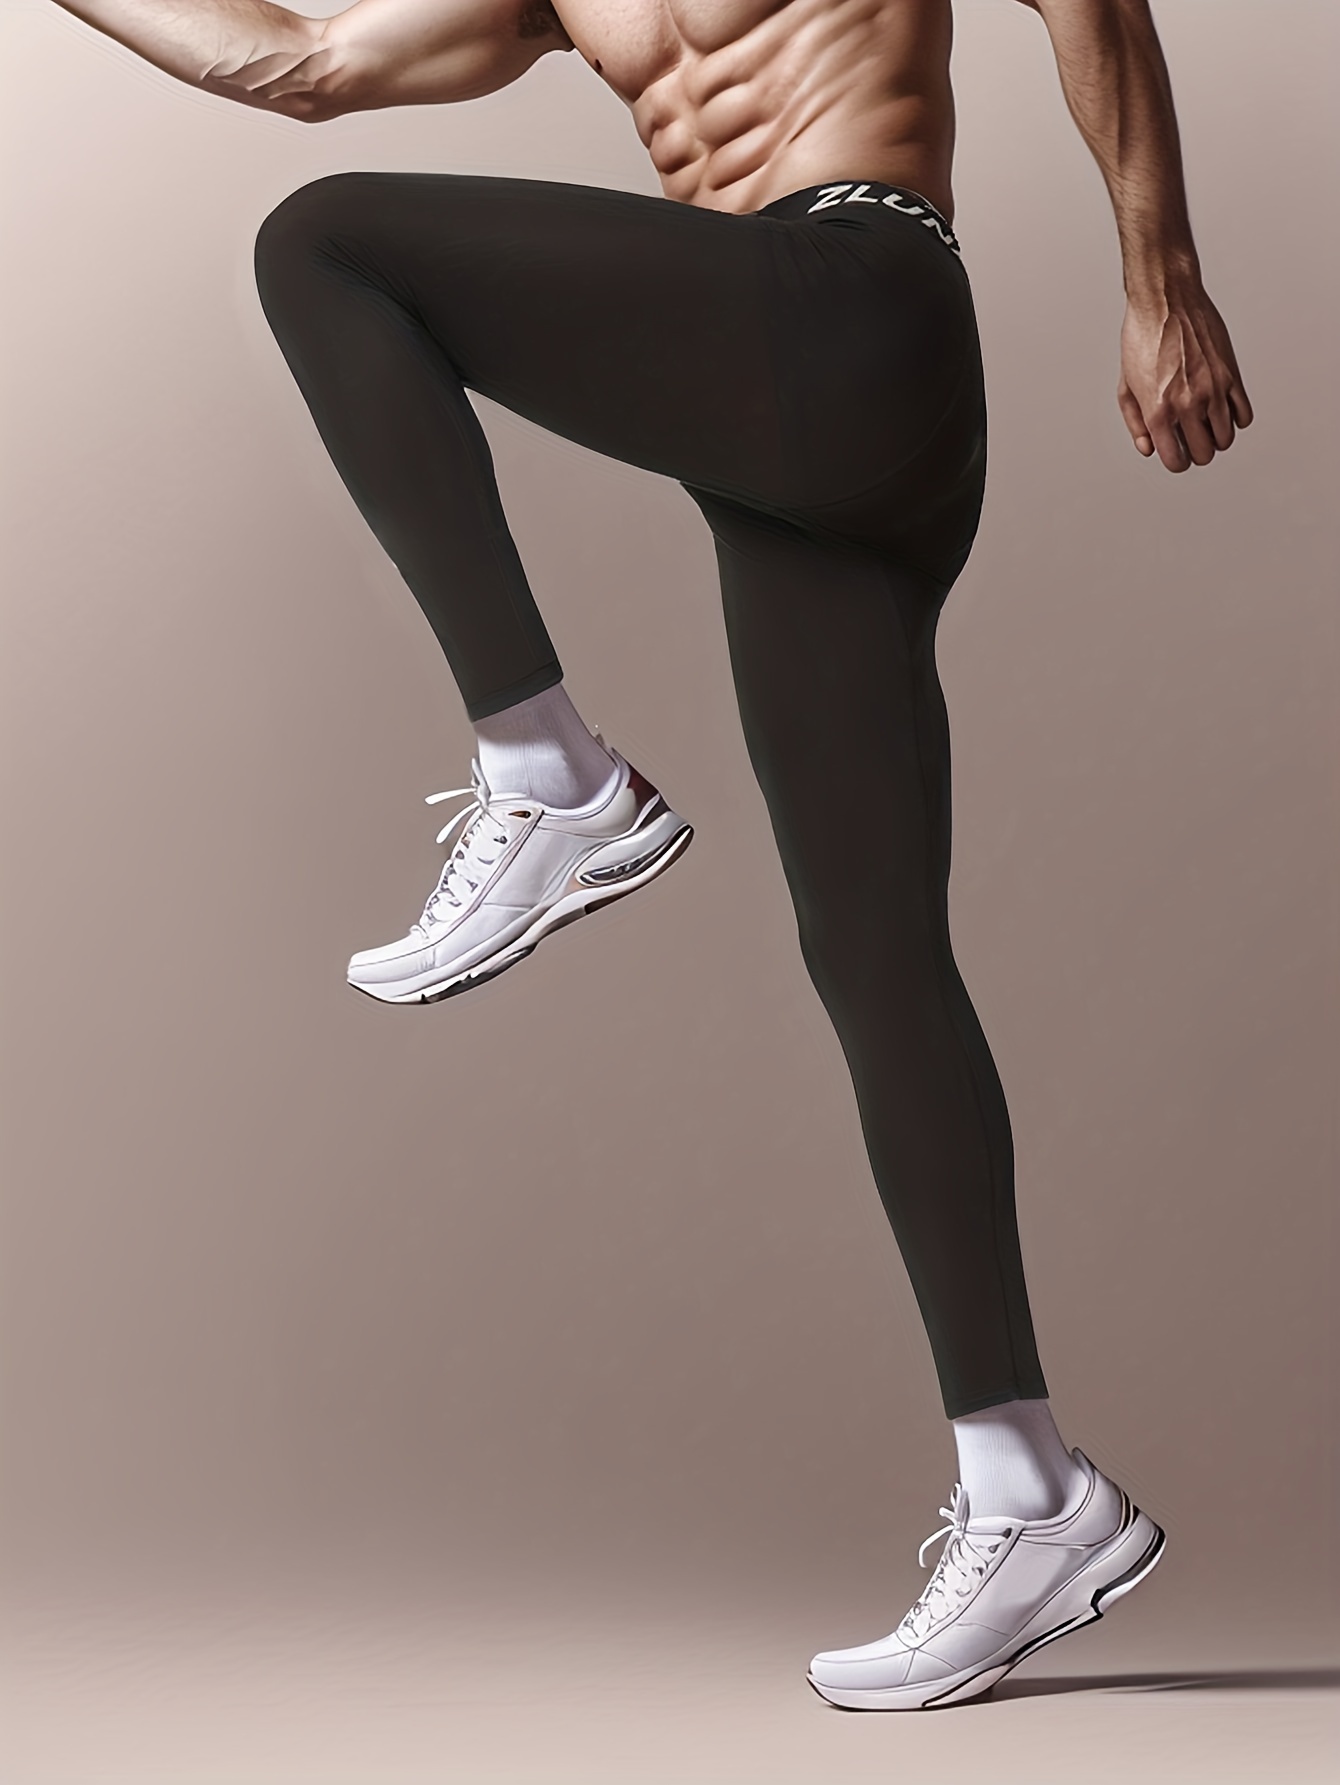 Noarlalf Workout Pants for Men Workout Leggings for Men Simple